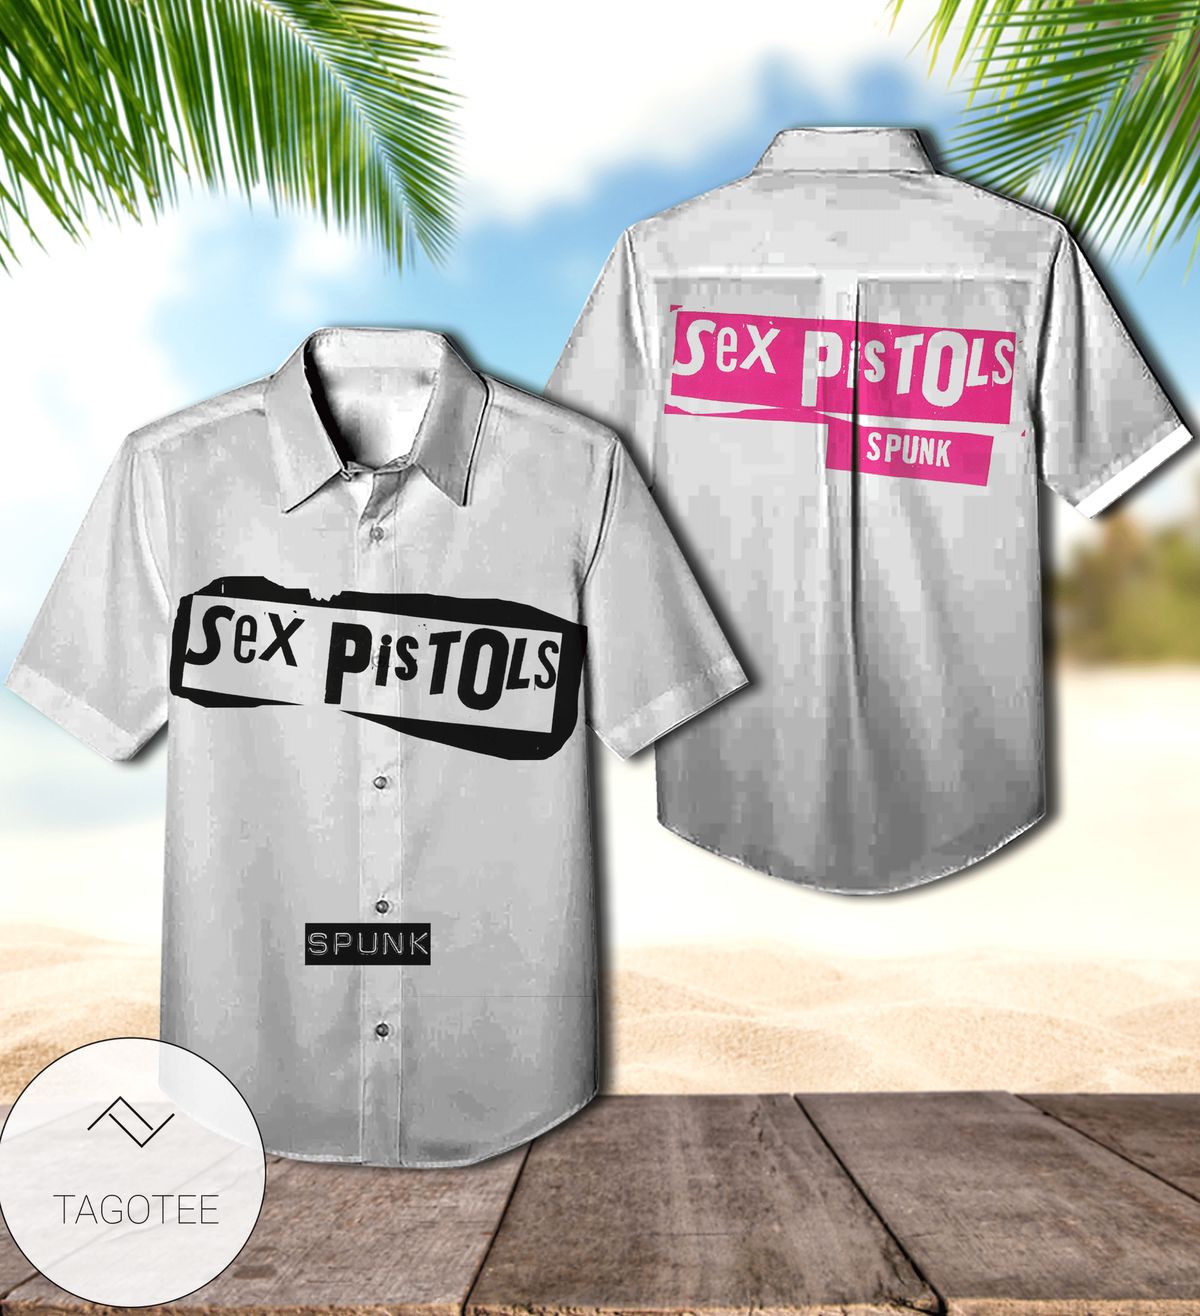 Sex Pistols Spunk Album Cover Hawaiian Shirt